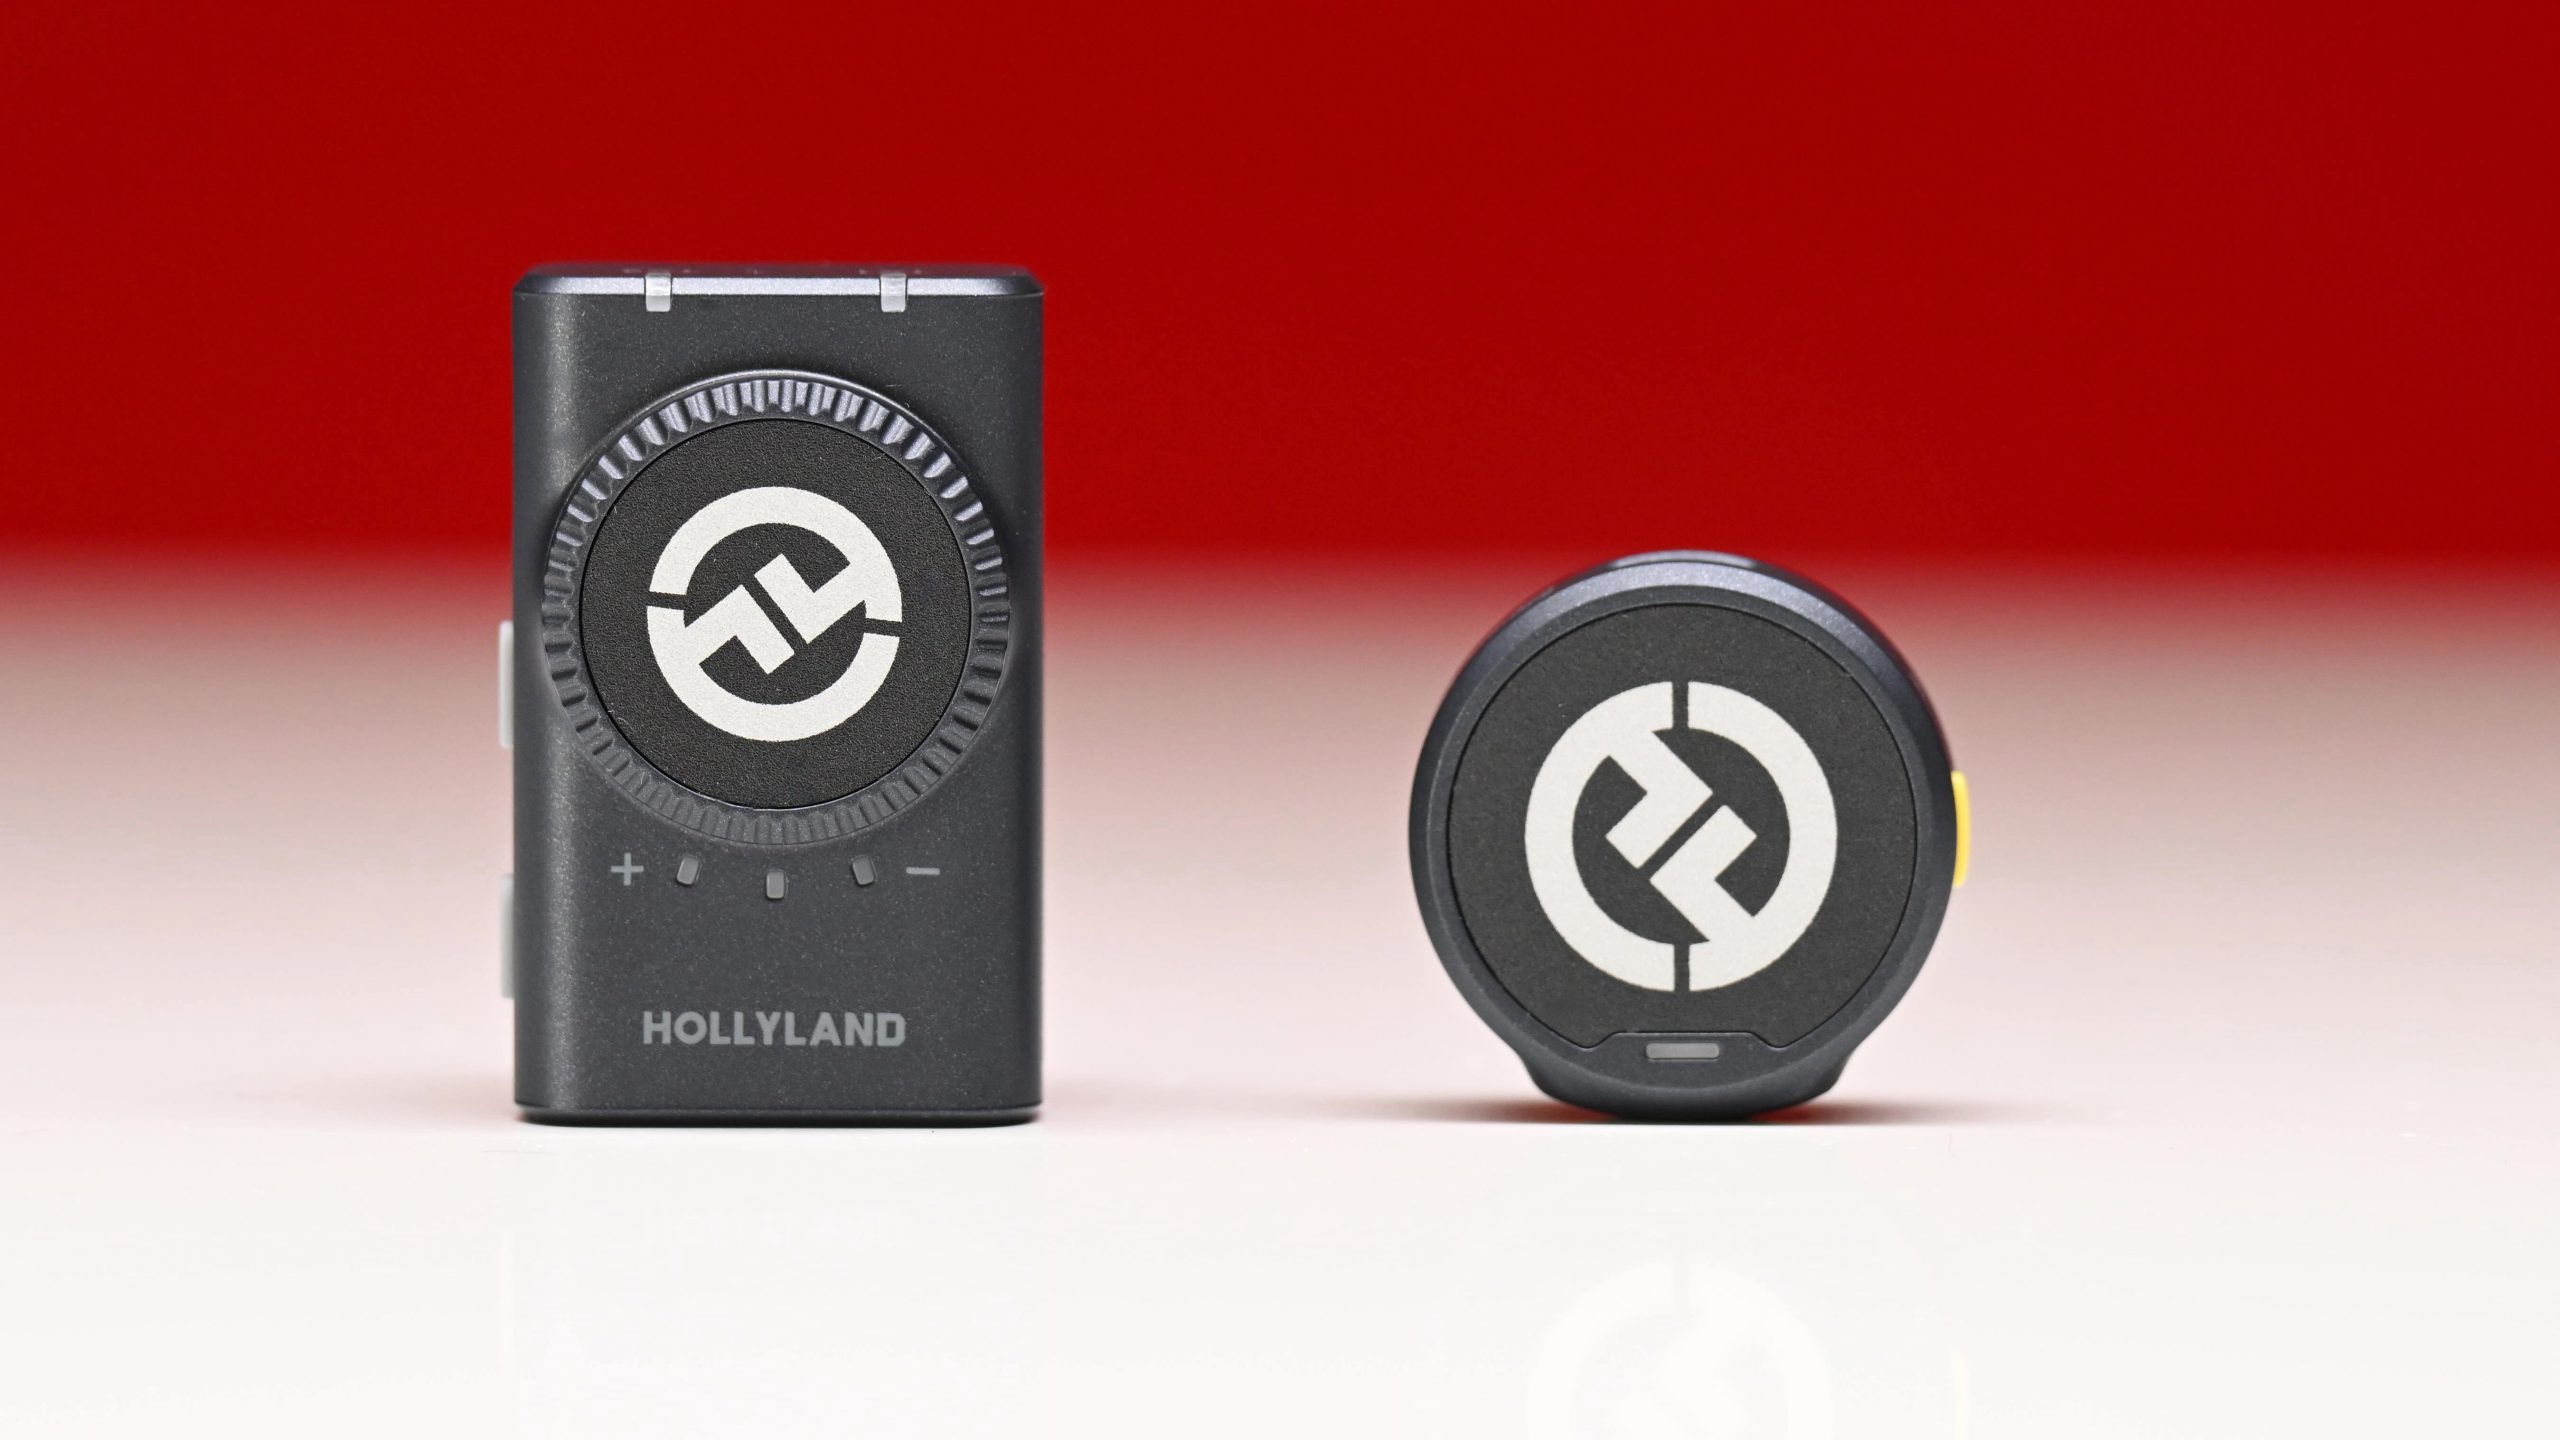 Hollyland Lark M2 Lightning Wireless lavalier microphone with Lightning  plug – Design Info